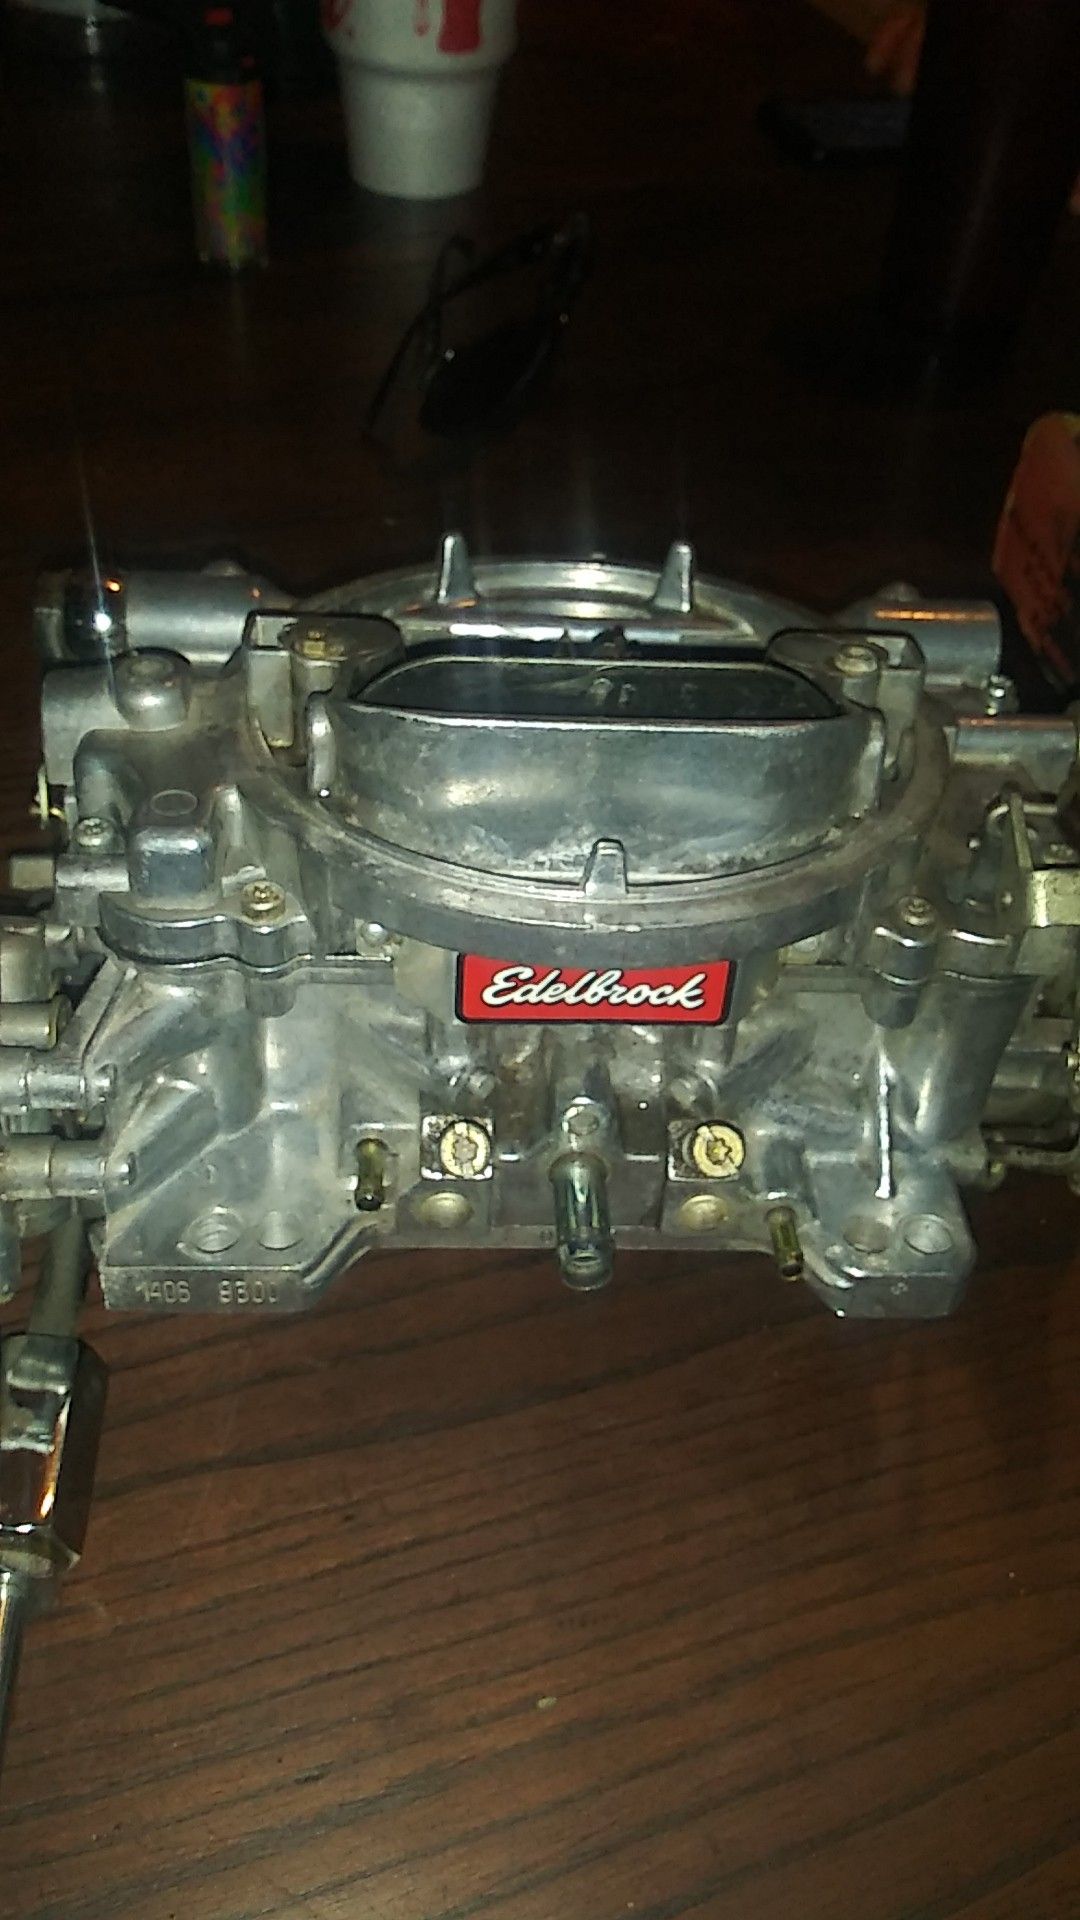 Edelbrock 650 4bbl square bore carburetor